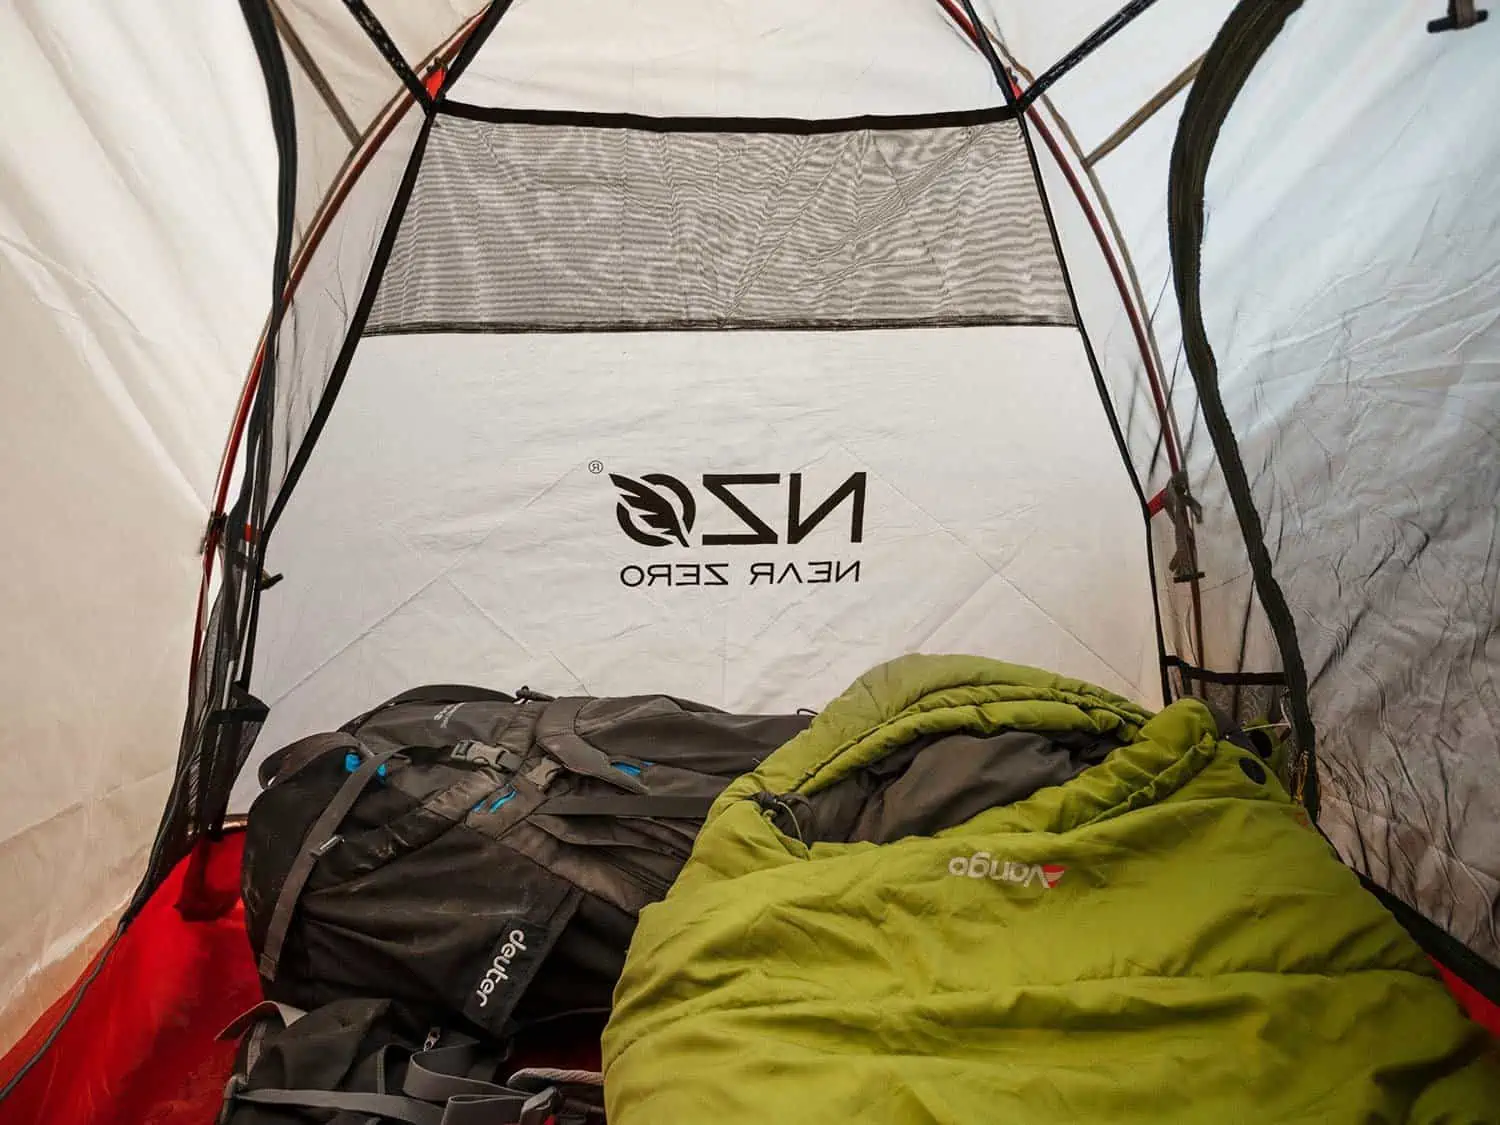 Interior of Near Zero Ultralightweight tent